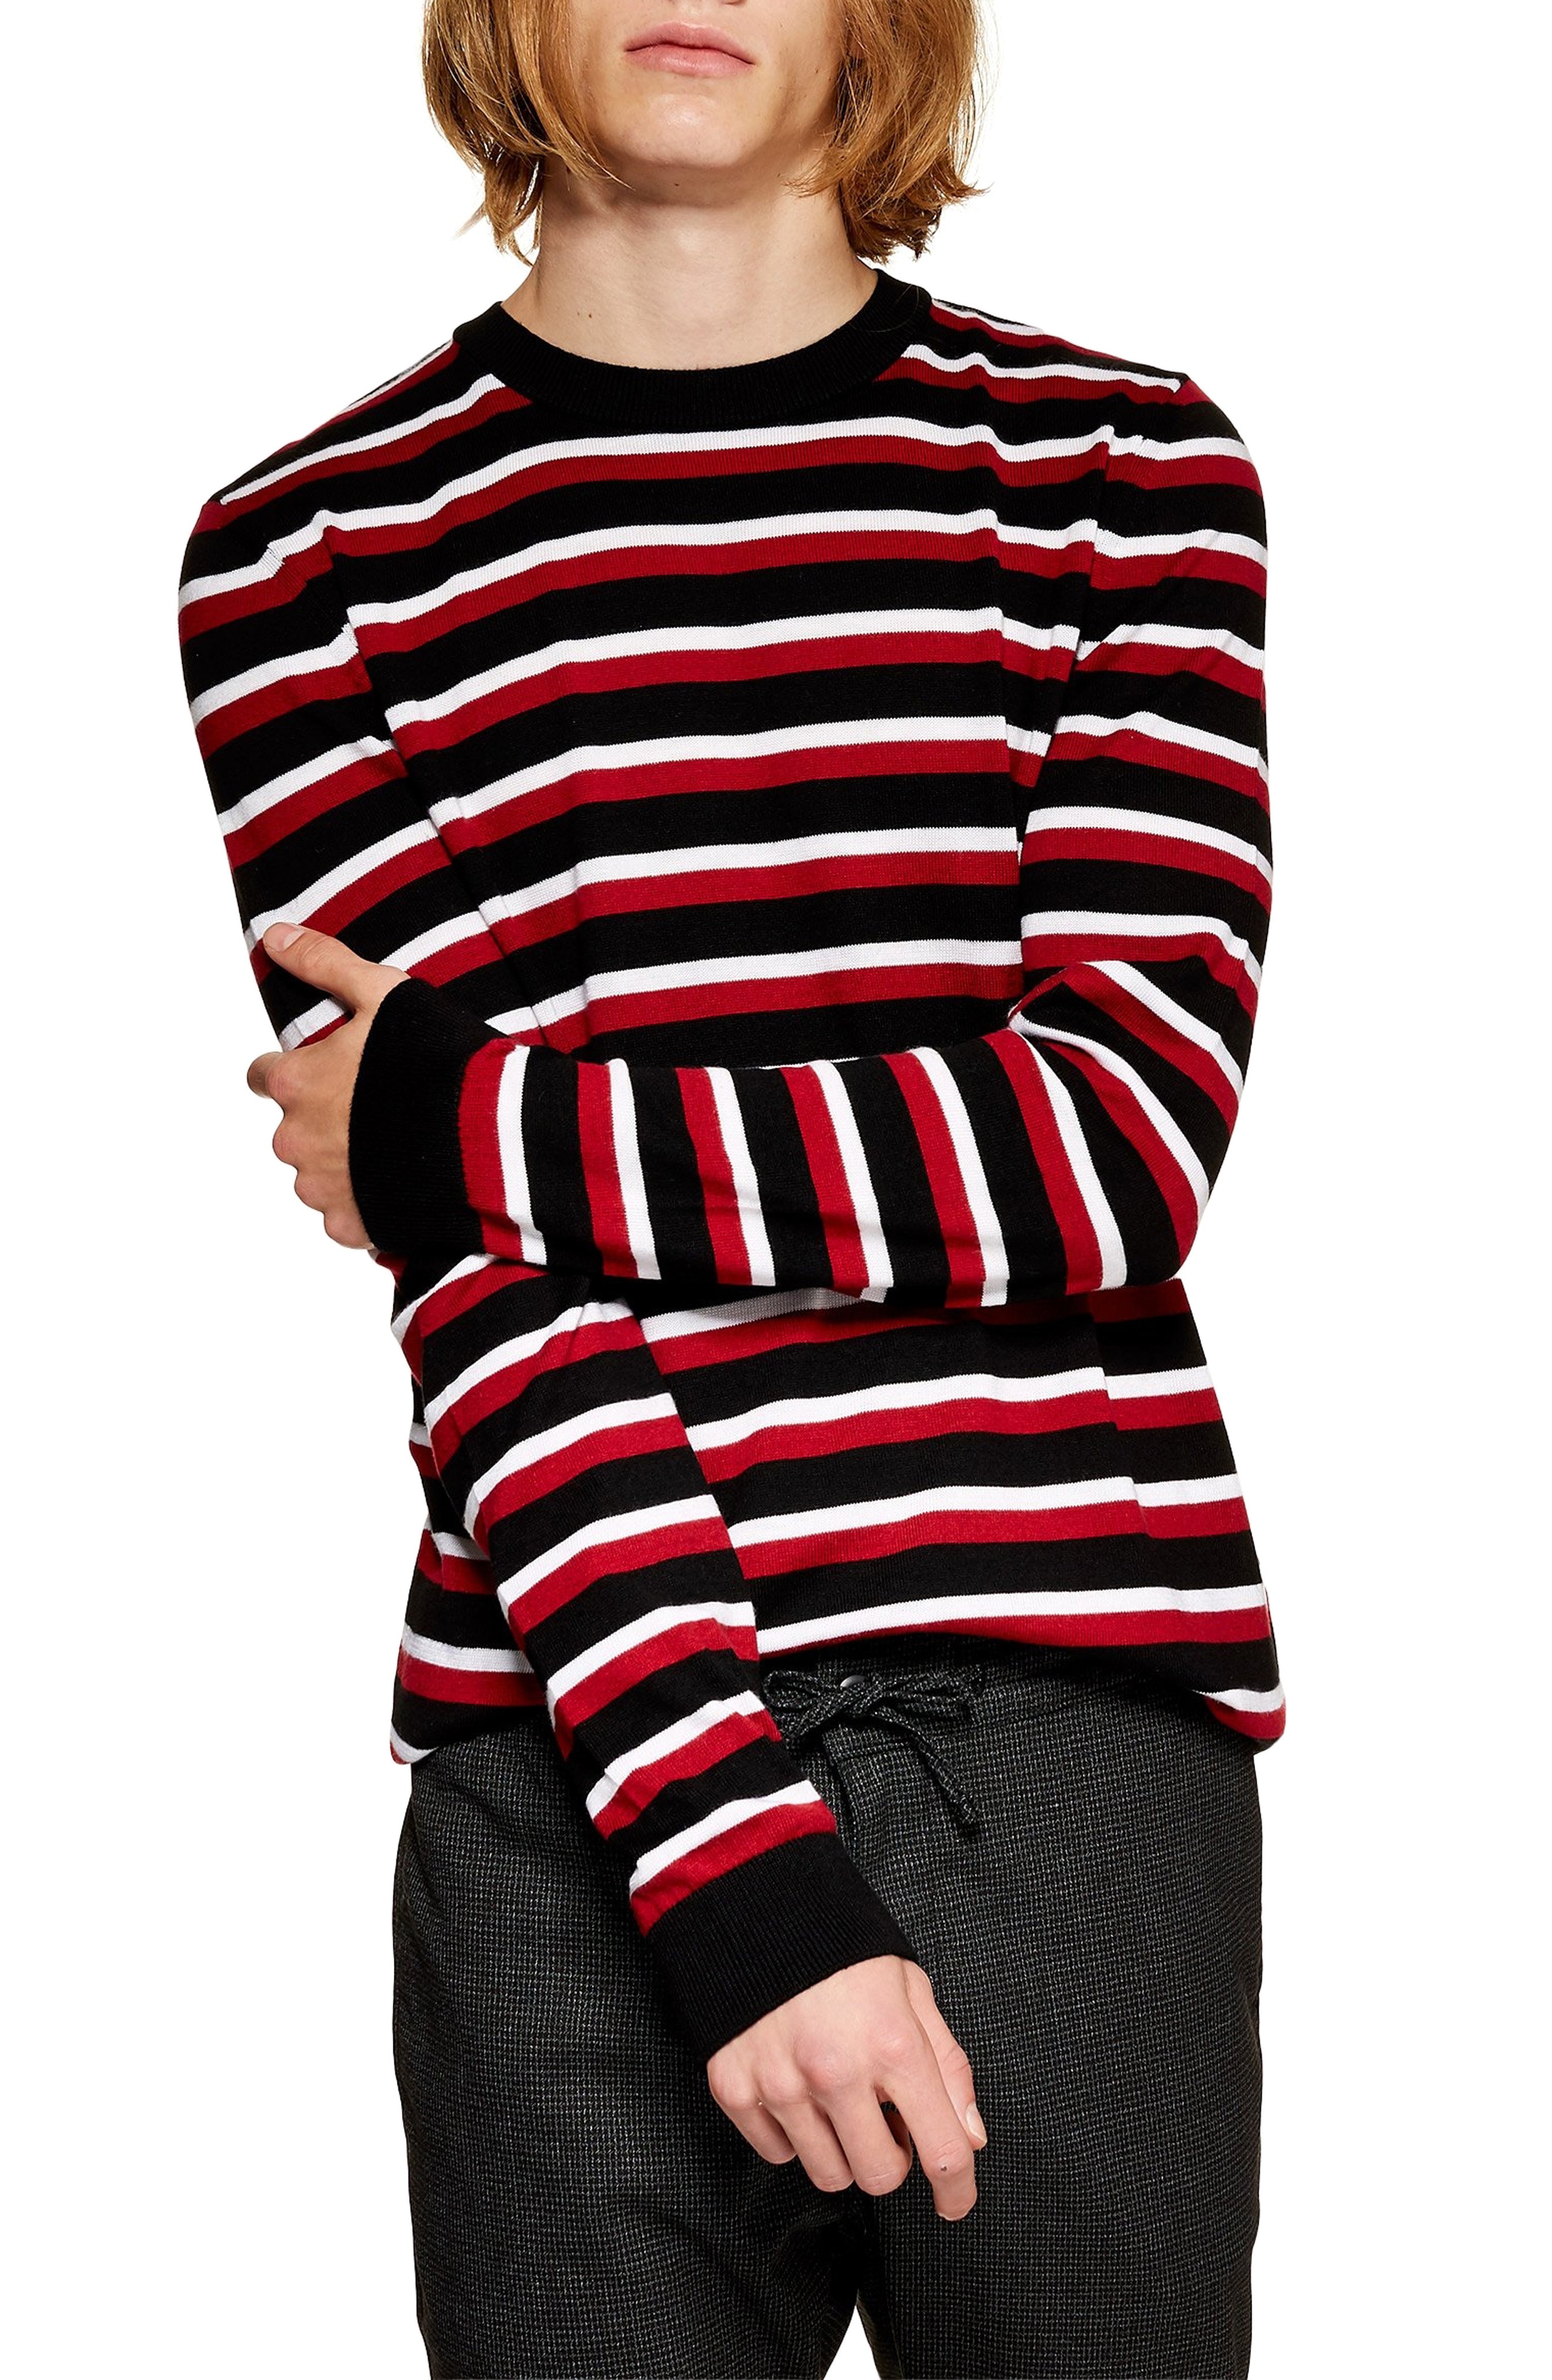 Men’s Topman Stripe Crewneck Sweater, Size Medium – Red | The Fashionisto